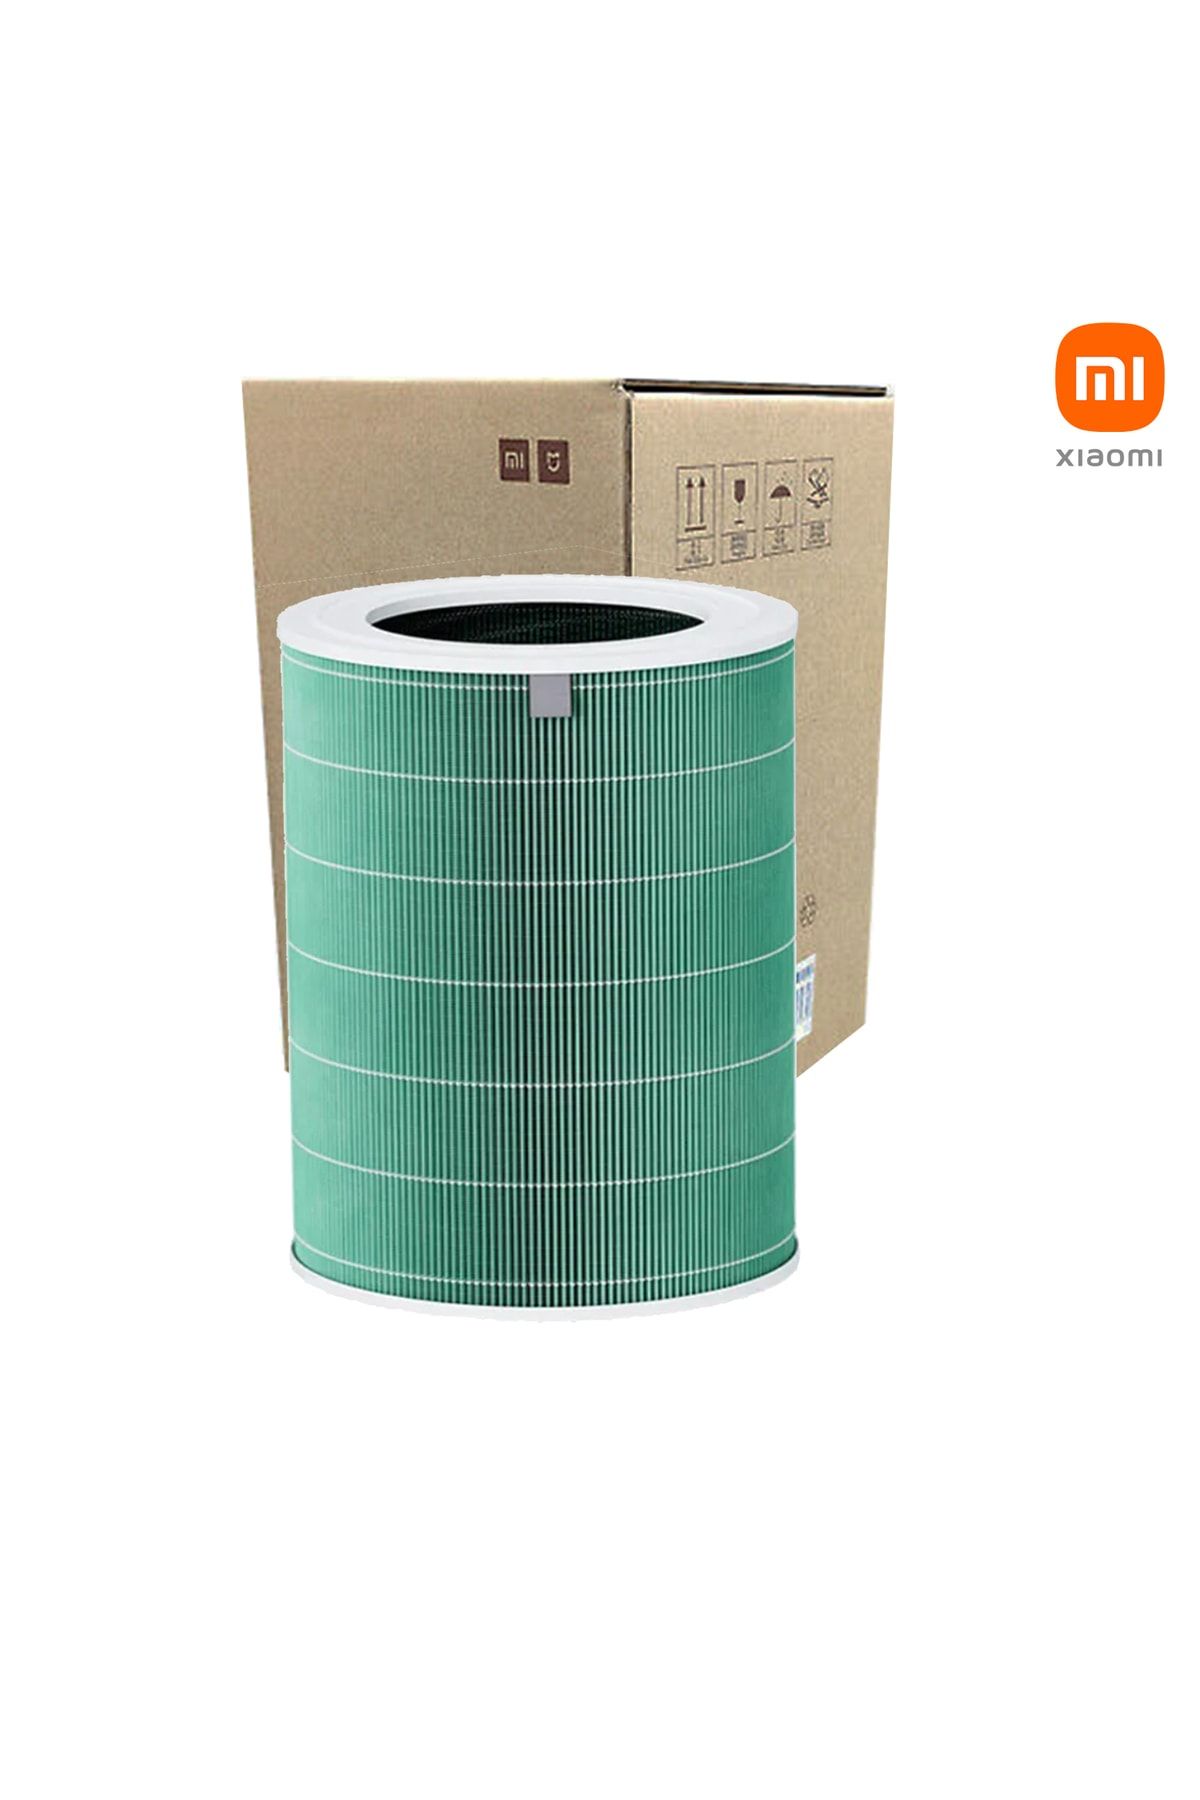 Xiaomi Smart Air Purifier 4 Filtre Hepa Karbon Yeşil Formaldehit. Rfid